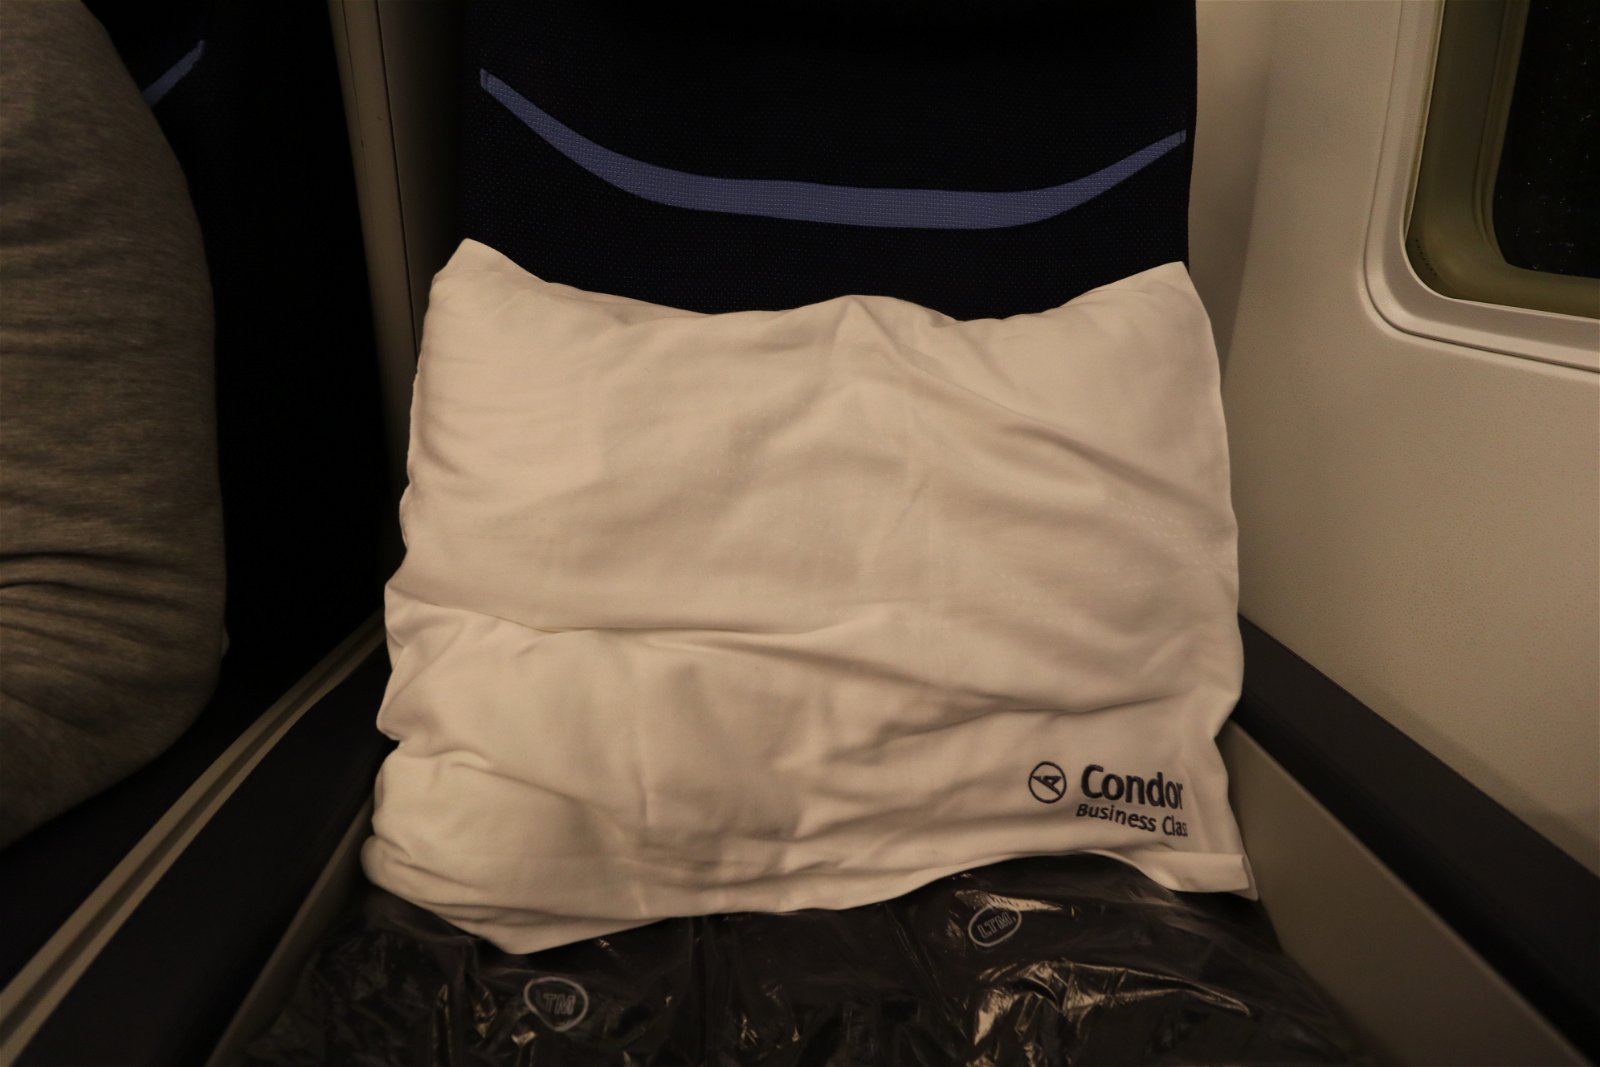 Condor Business Class pillow